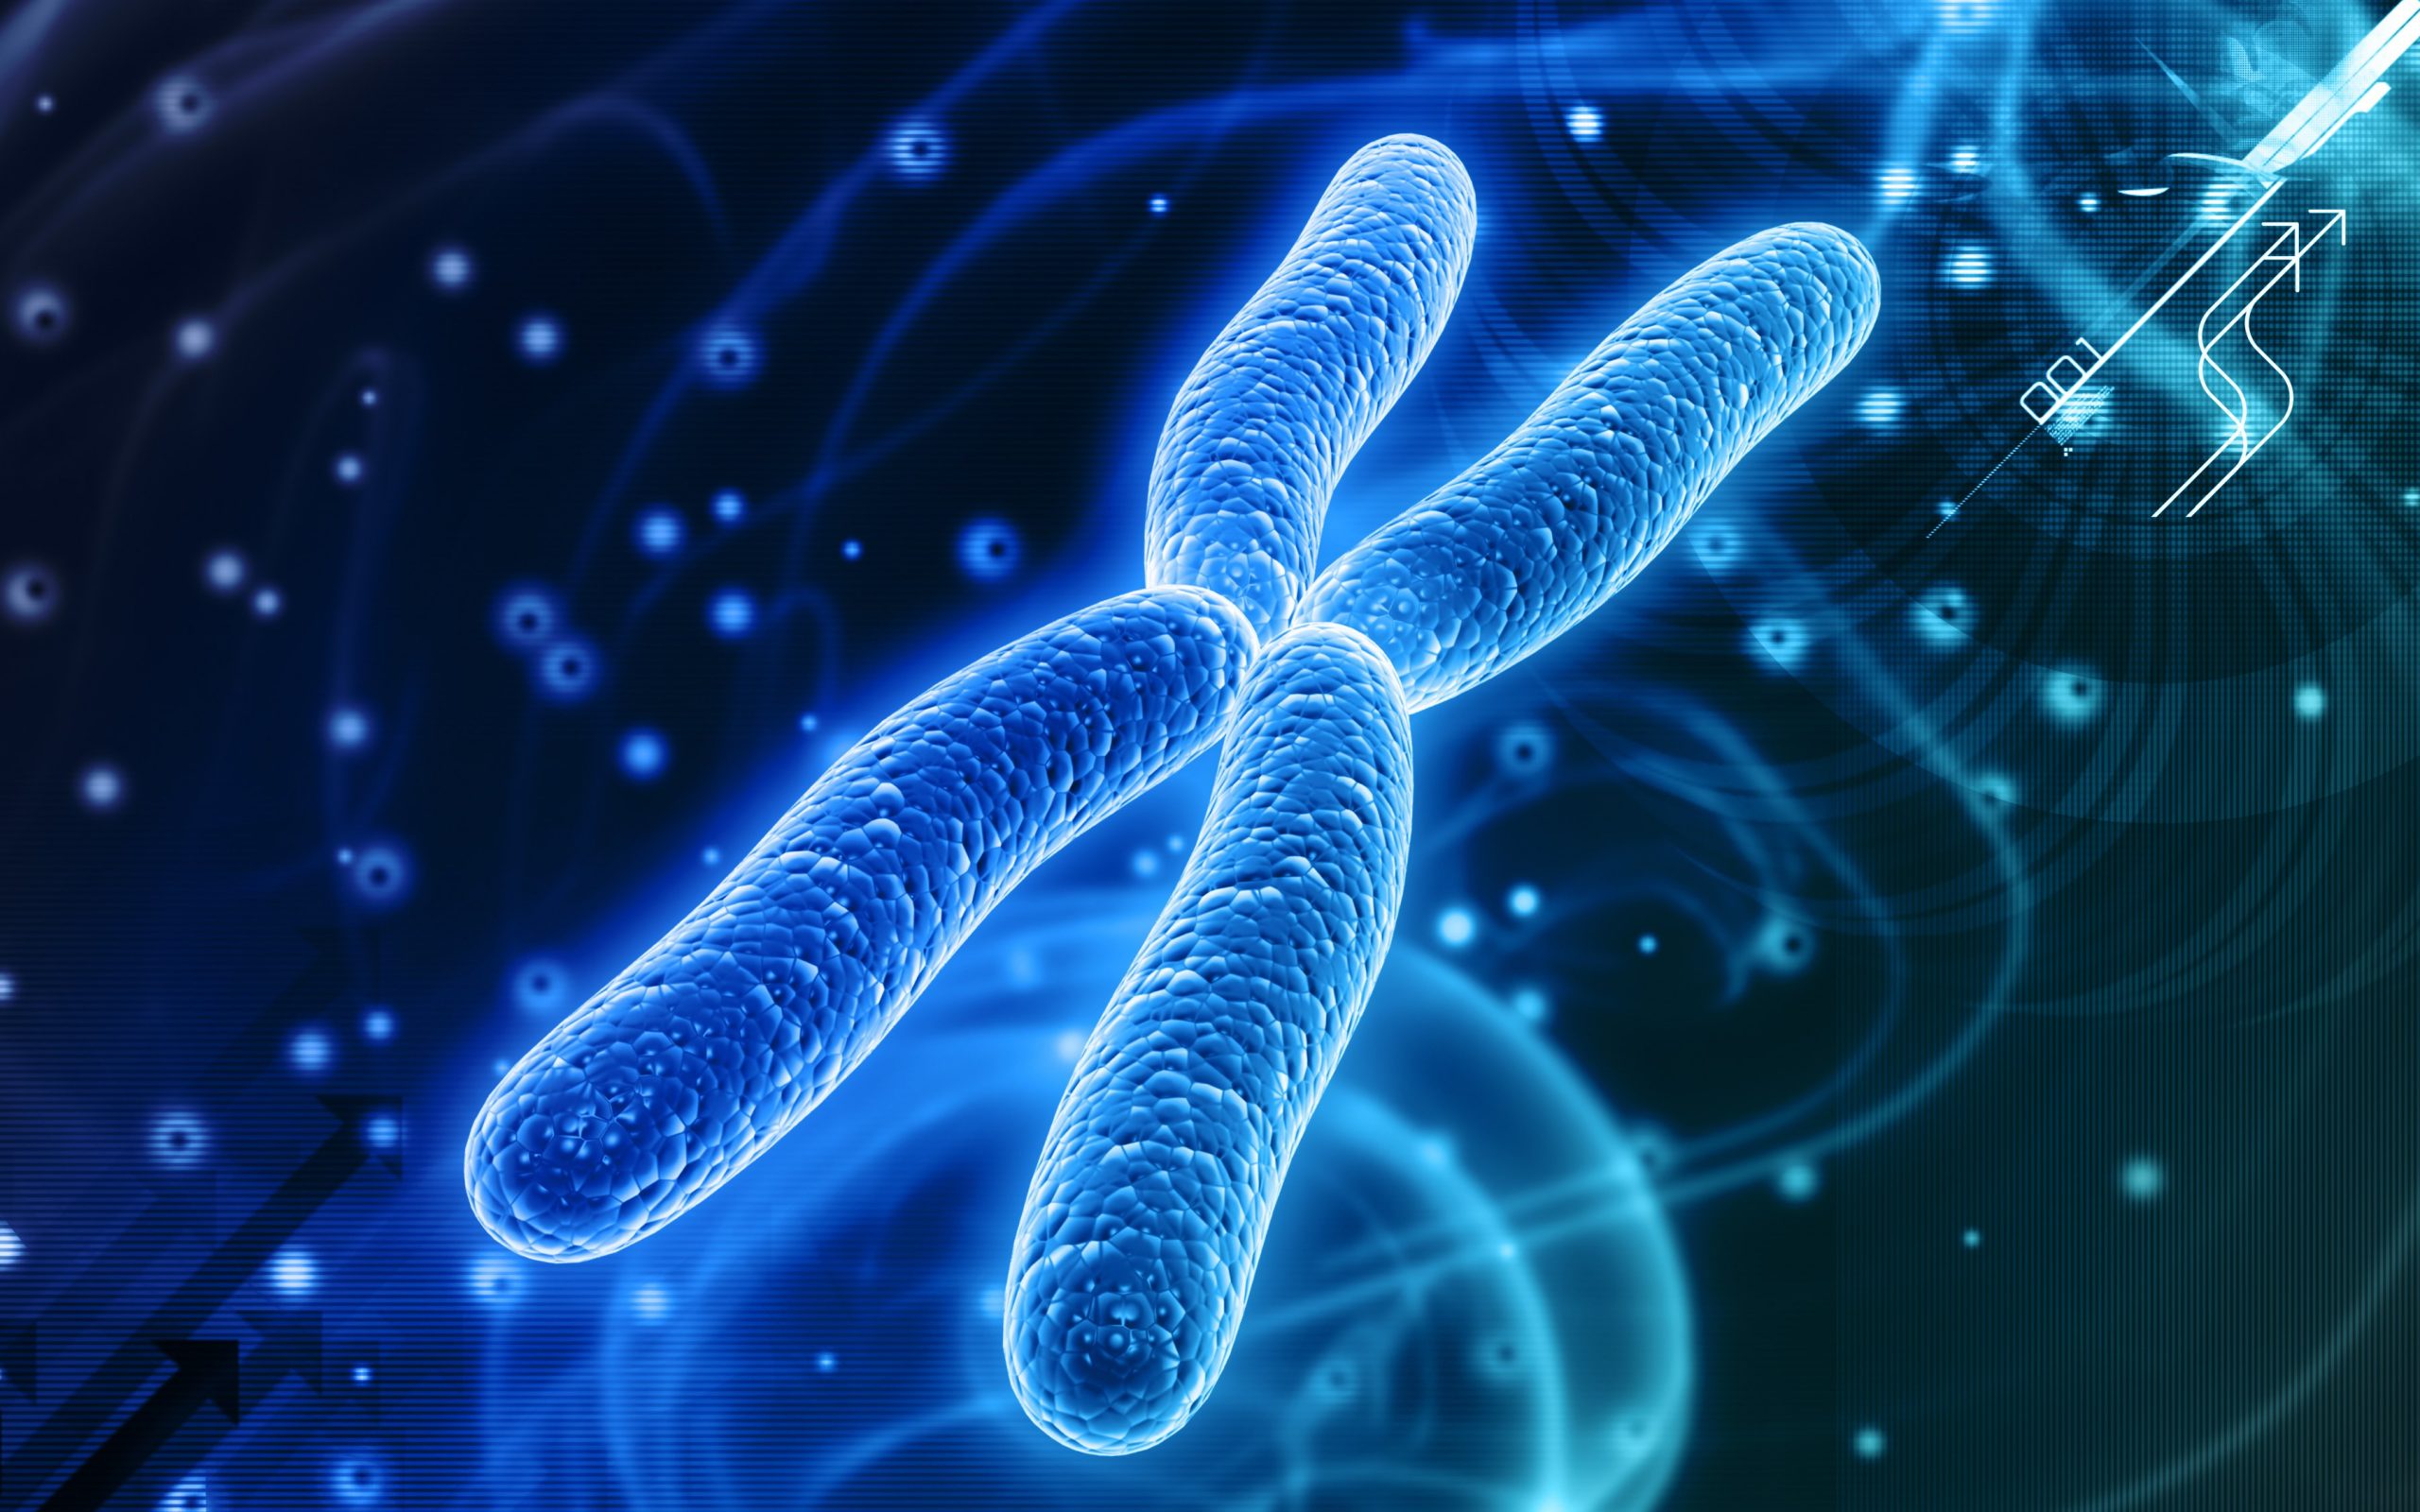 nucleosome-model-of-chromosomes-plantlet